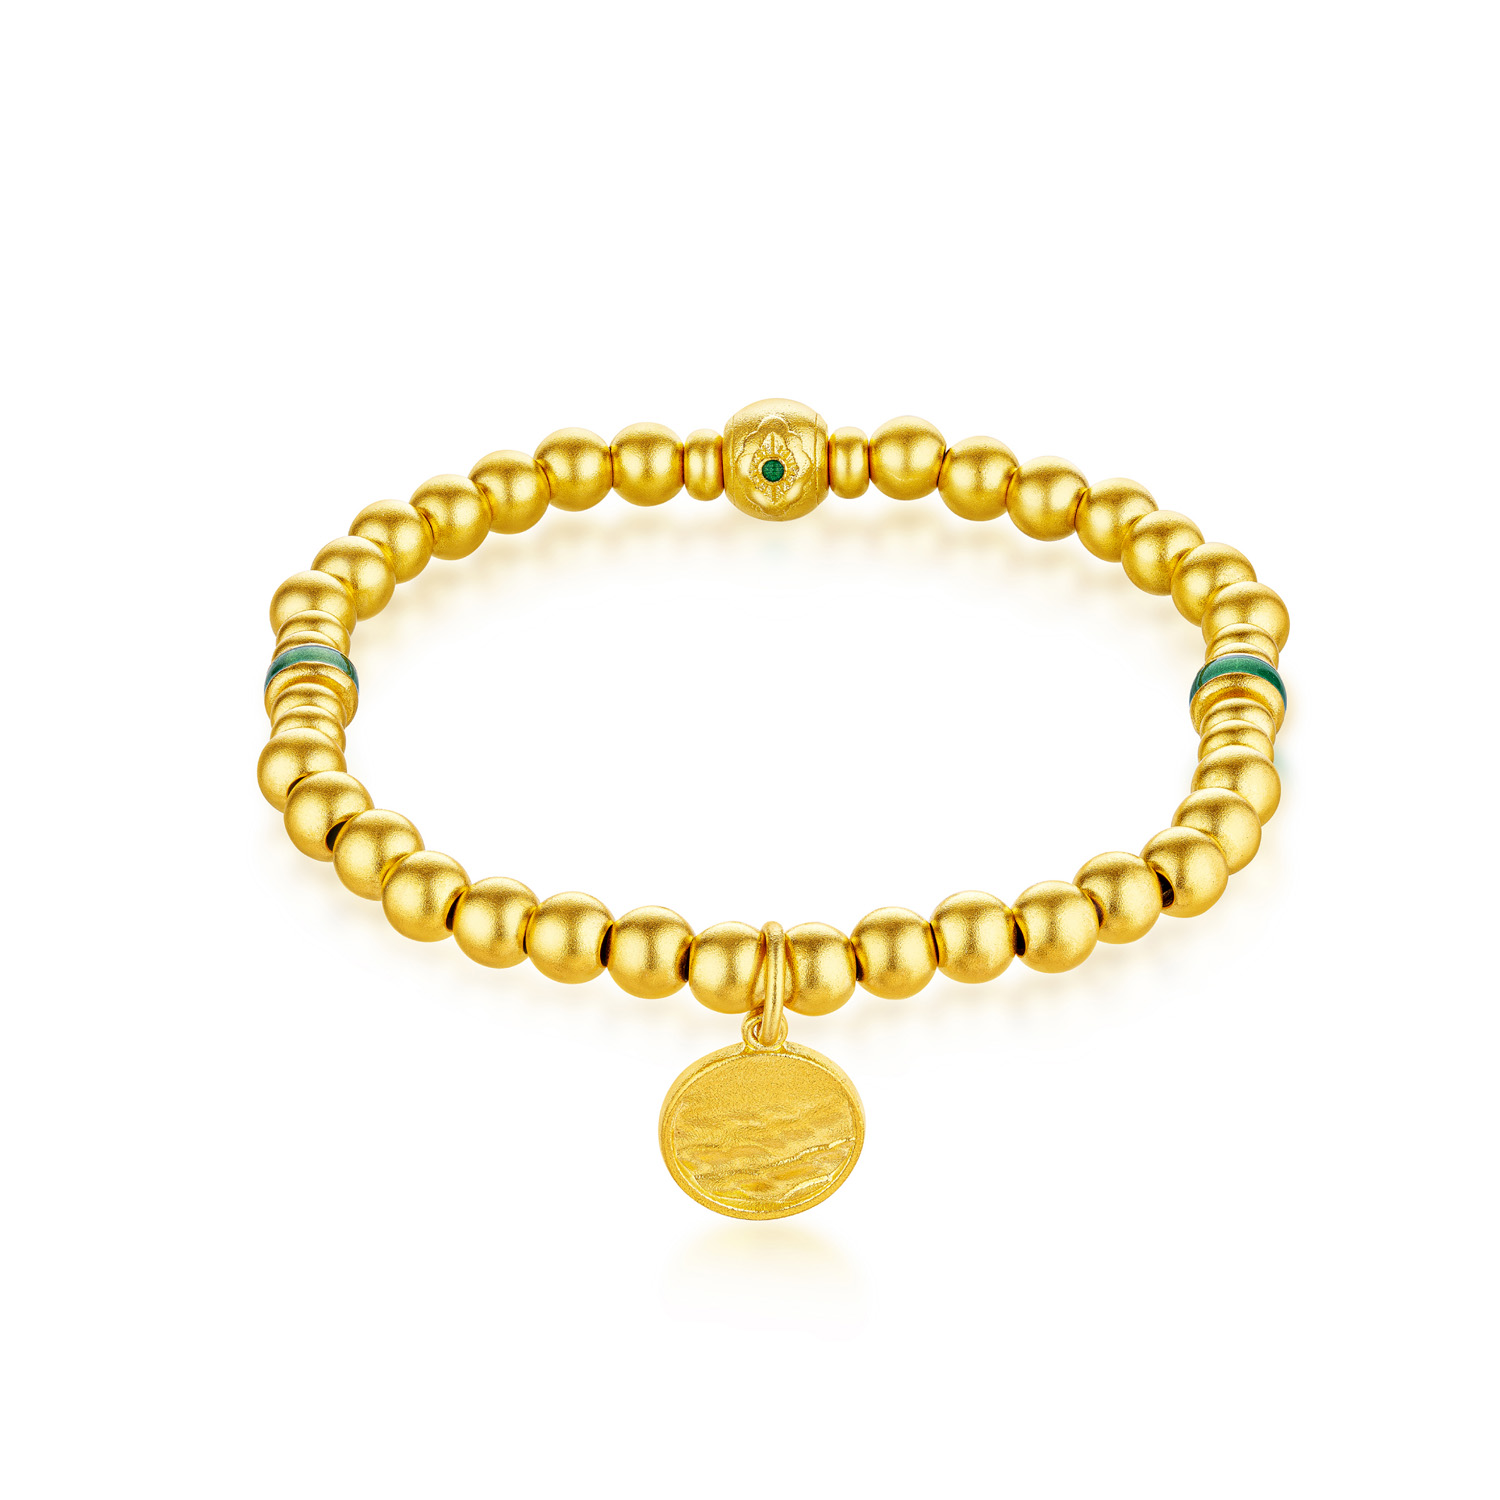 Heirloom Fortune - Charm of Song Dynasty Collection "Landscape" Gold Bracelet